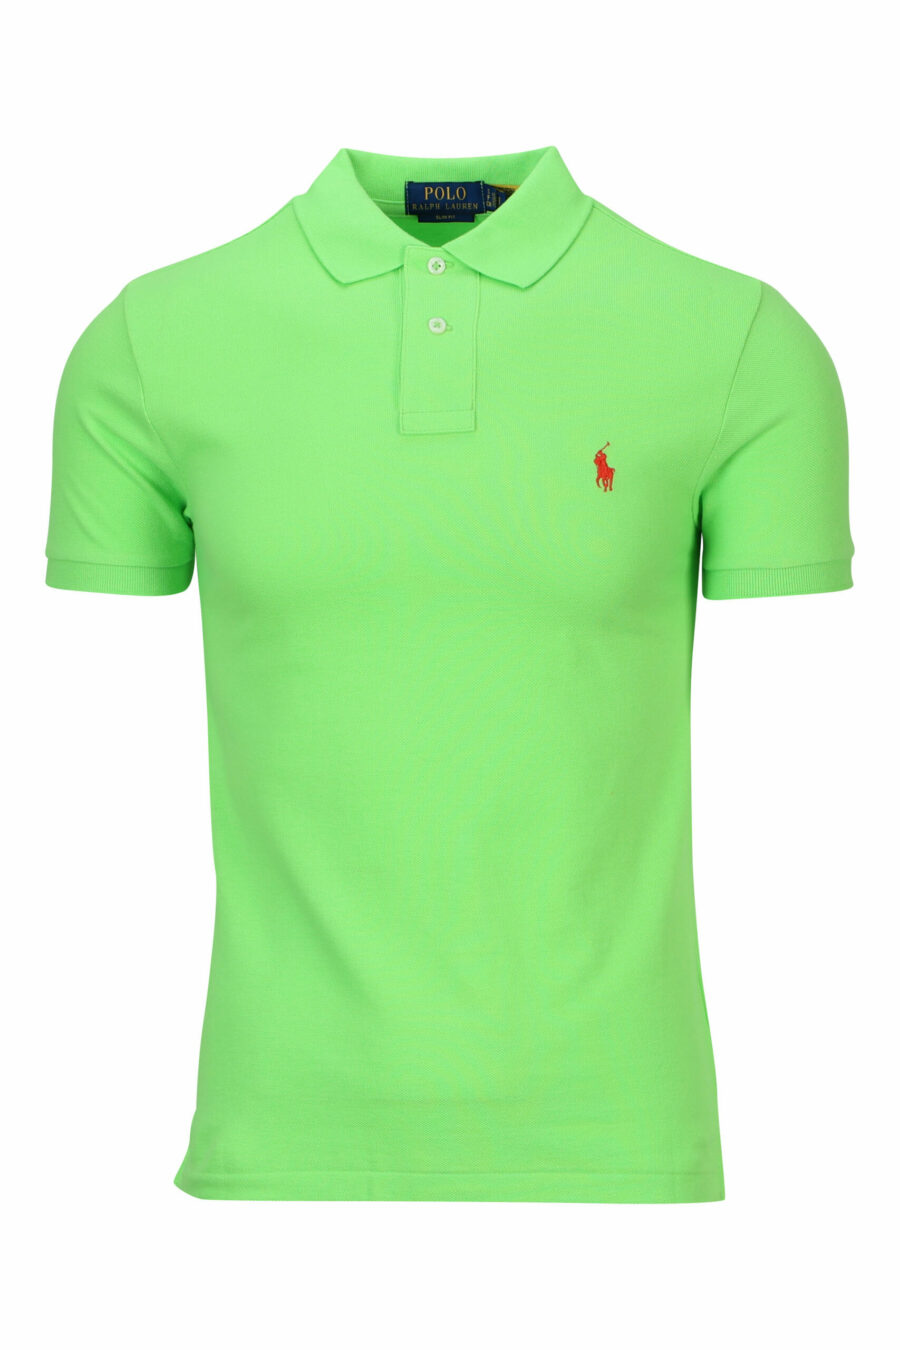 Hellgrünes Poloshirt mit Mini-Logo "Polo" - 3616411864338 skaliert